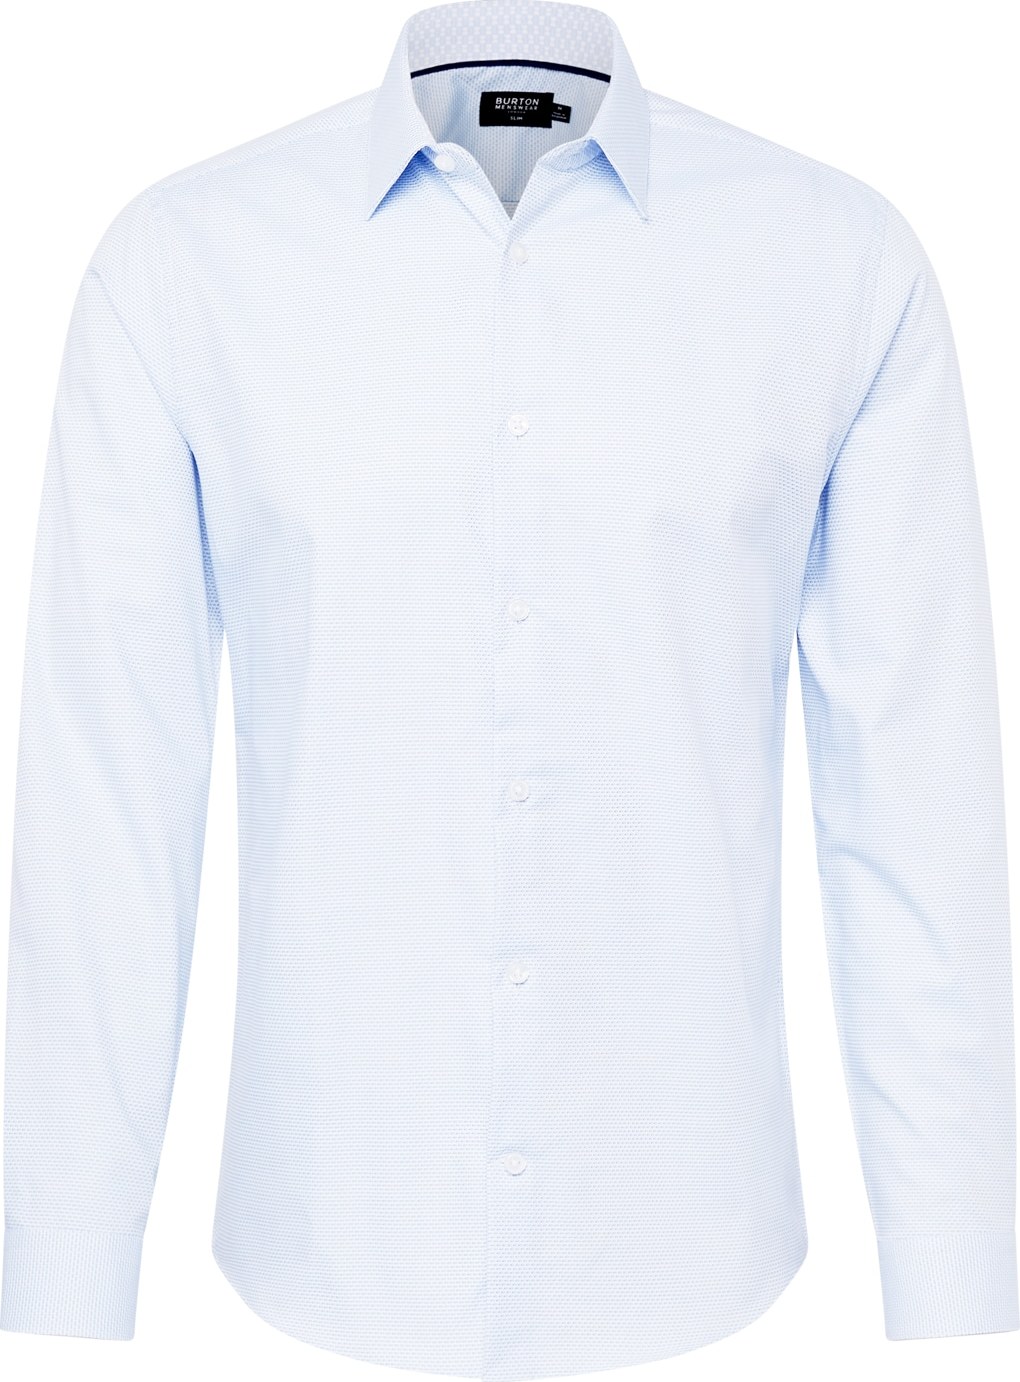 BURTON MENSWEAR LONDON Společenská košile světlemodrá / bílá